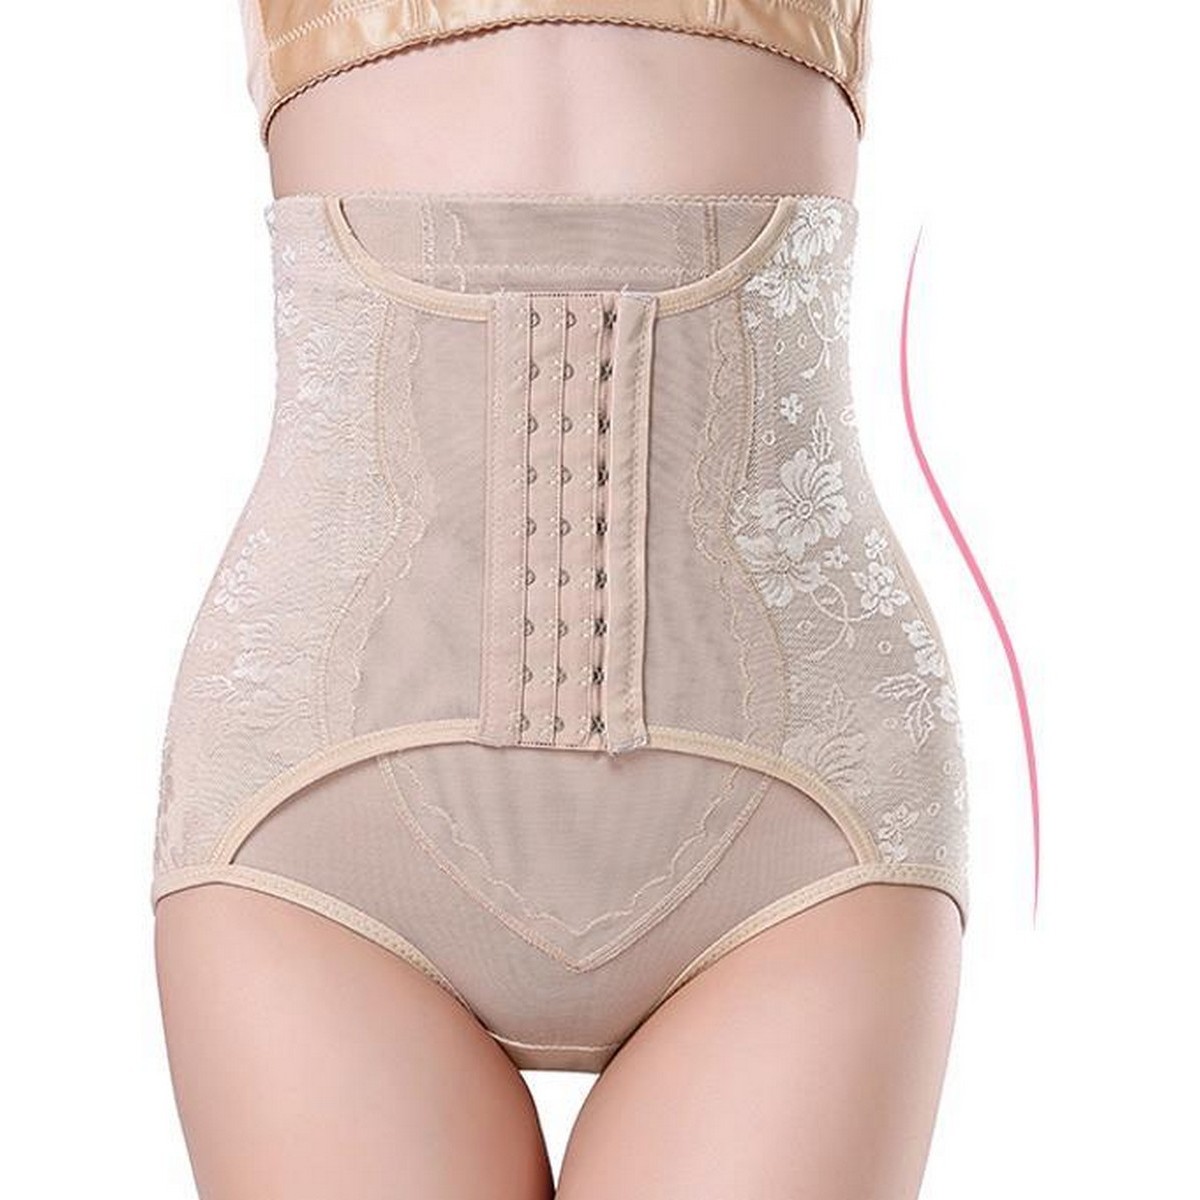 Miss Fit Body Korse Seamless Body Shaper Underwear - 1255 Price in